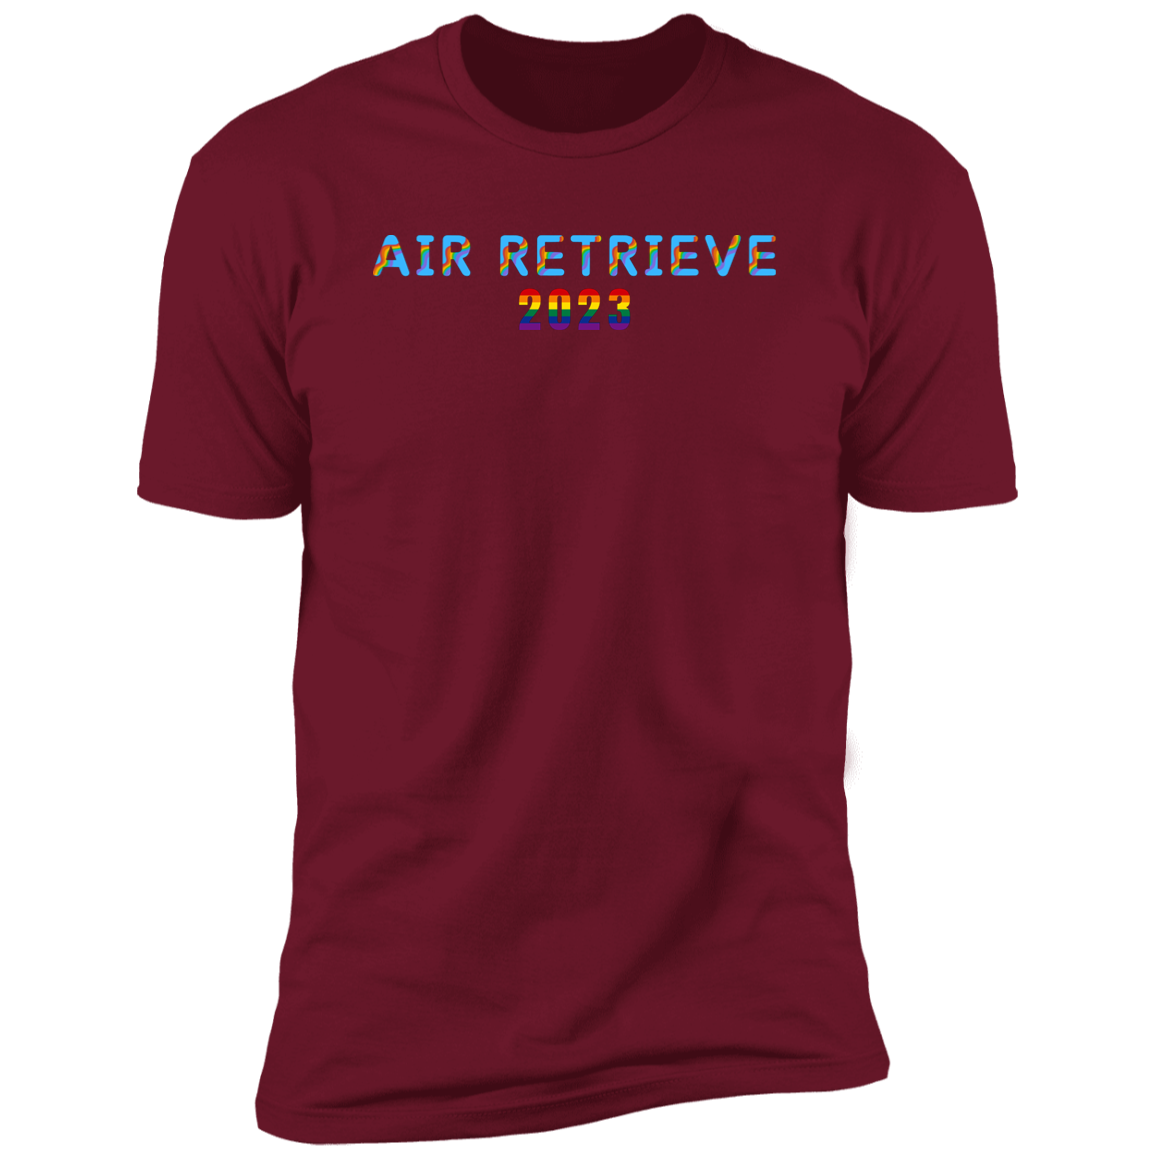 Air Retrieve 2023 Pride Dock diving t-shirt, dog pride air retrieve dock diving shirt for humans, in cardinal red